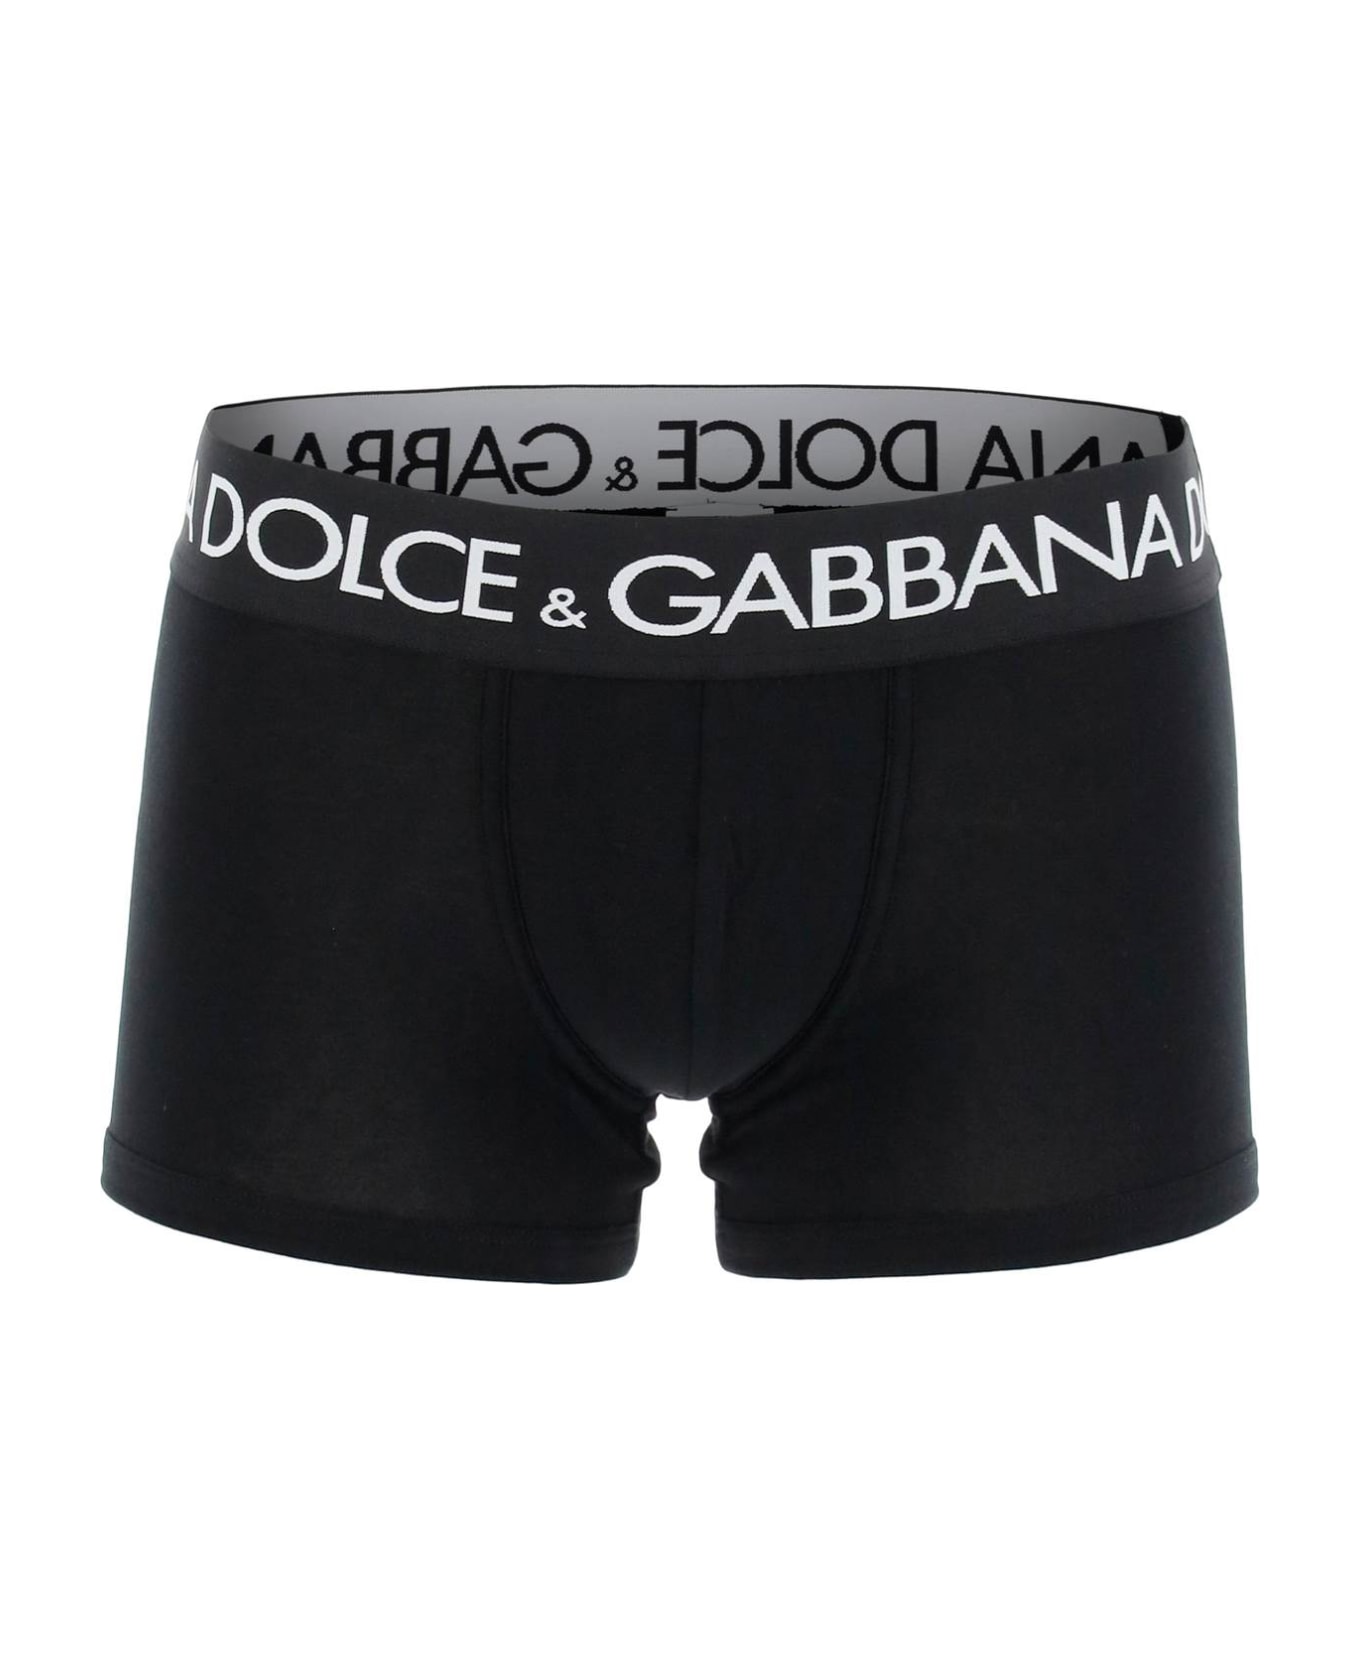 Dolce & Gabbana Bi-pack Underwear Boxer - NERO (Black) スイムトランクス